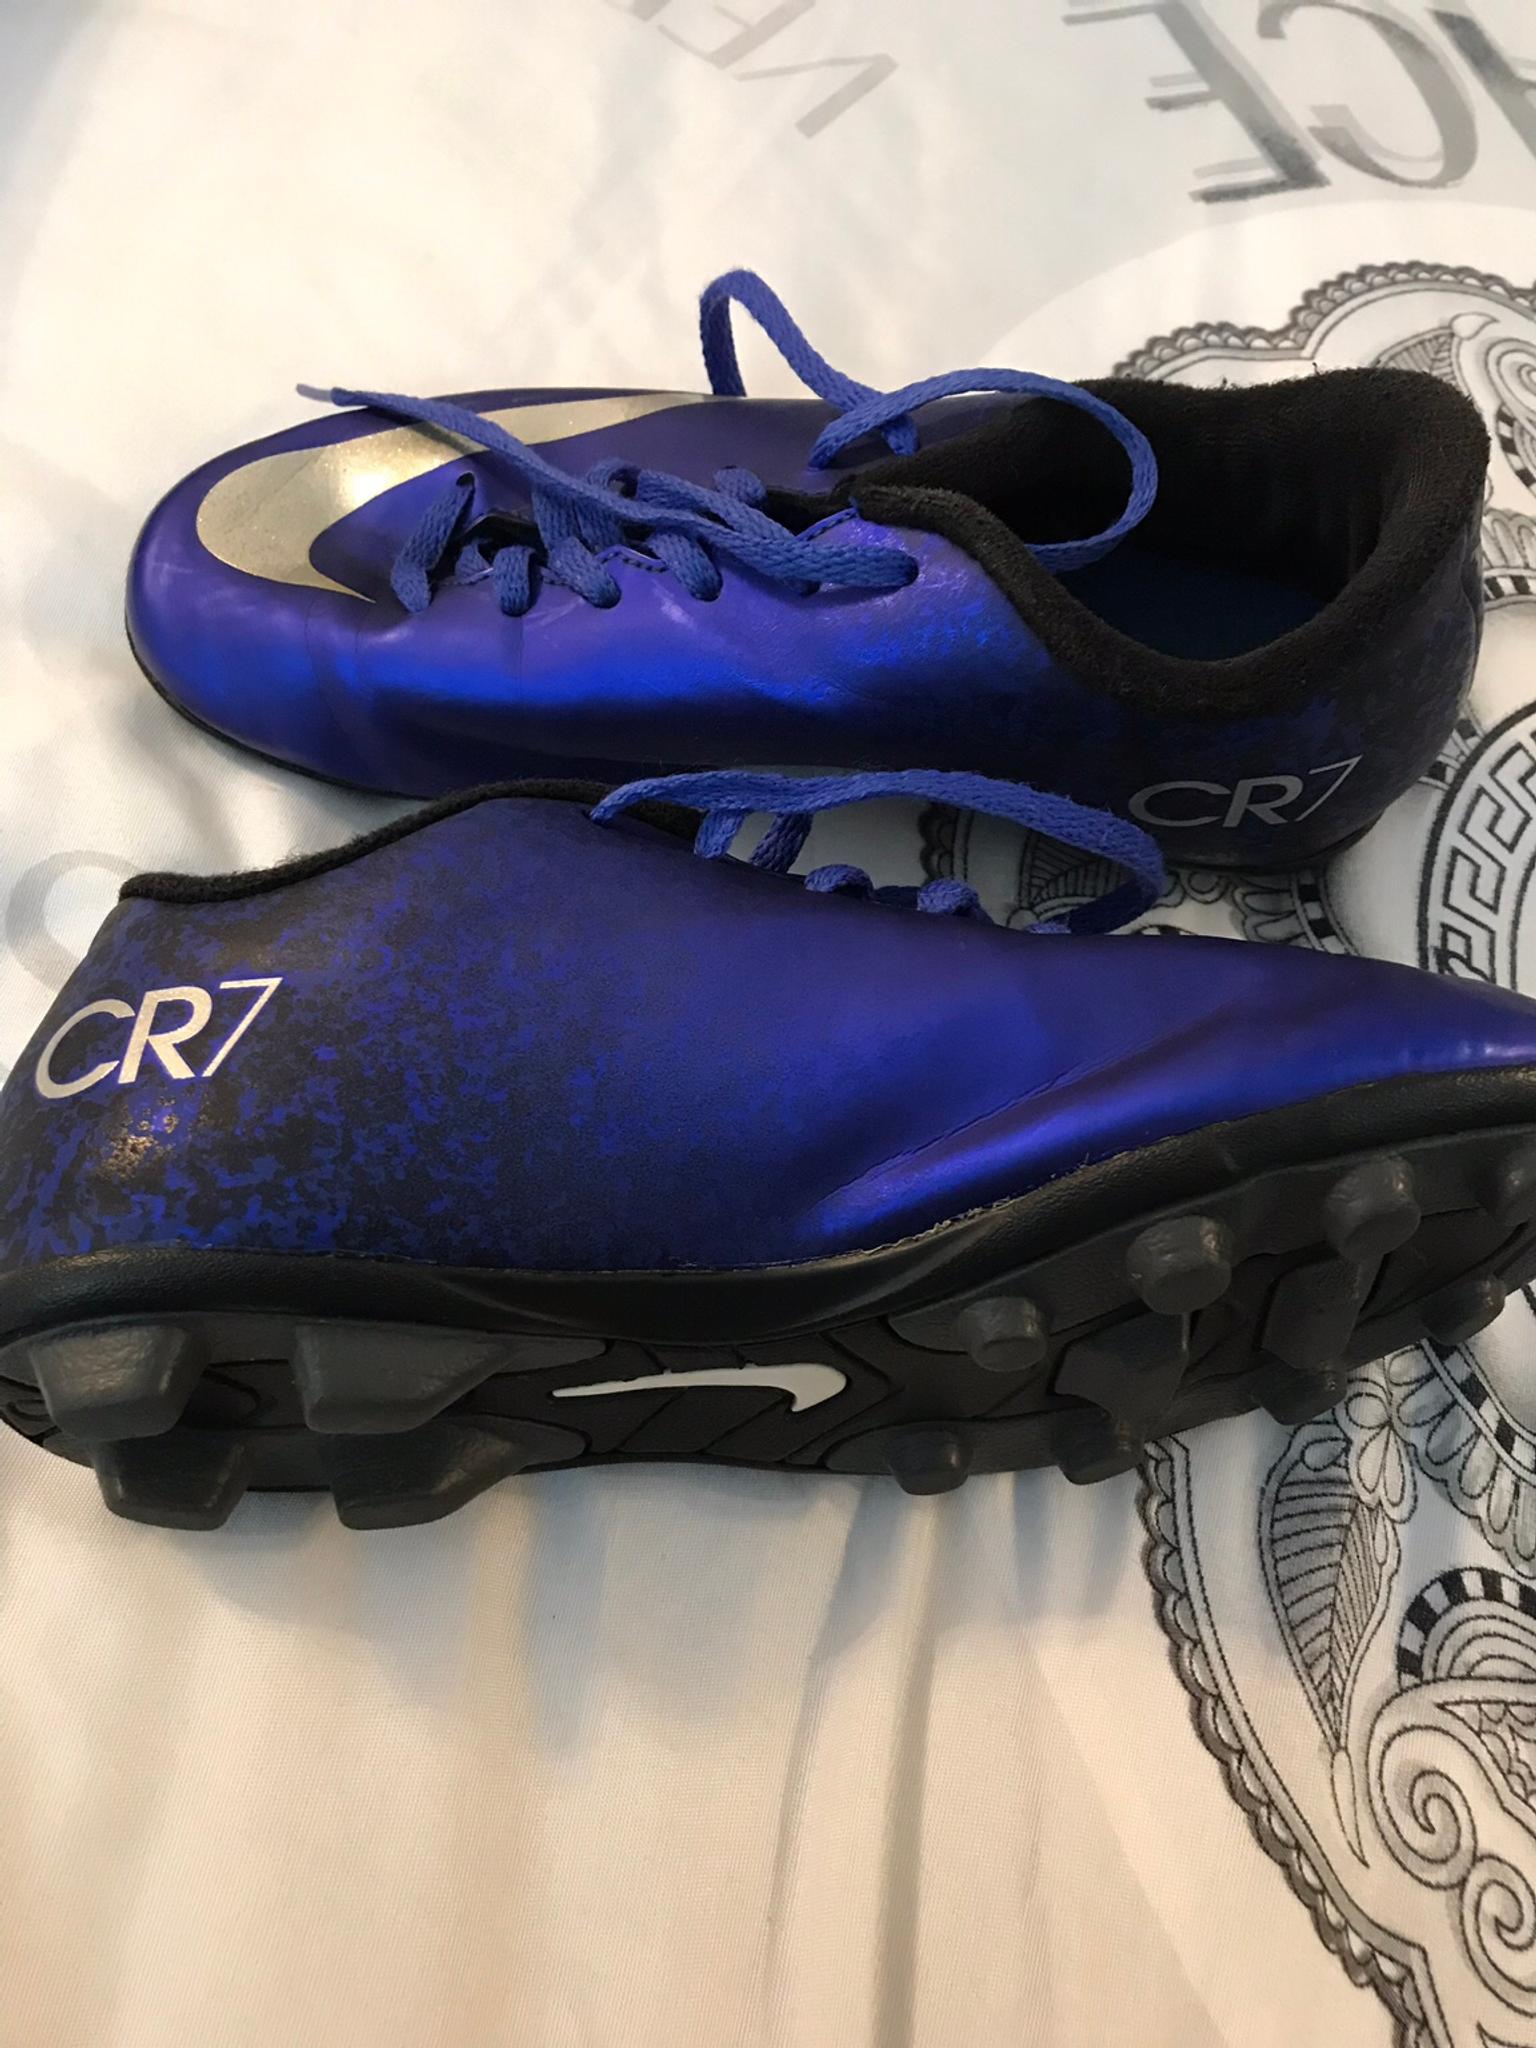 Ronaldo CR7 Boots Clothing Gear. Nike IE